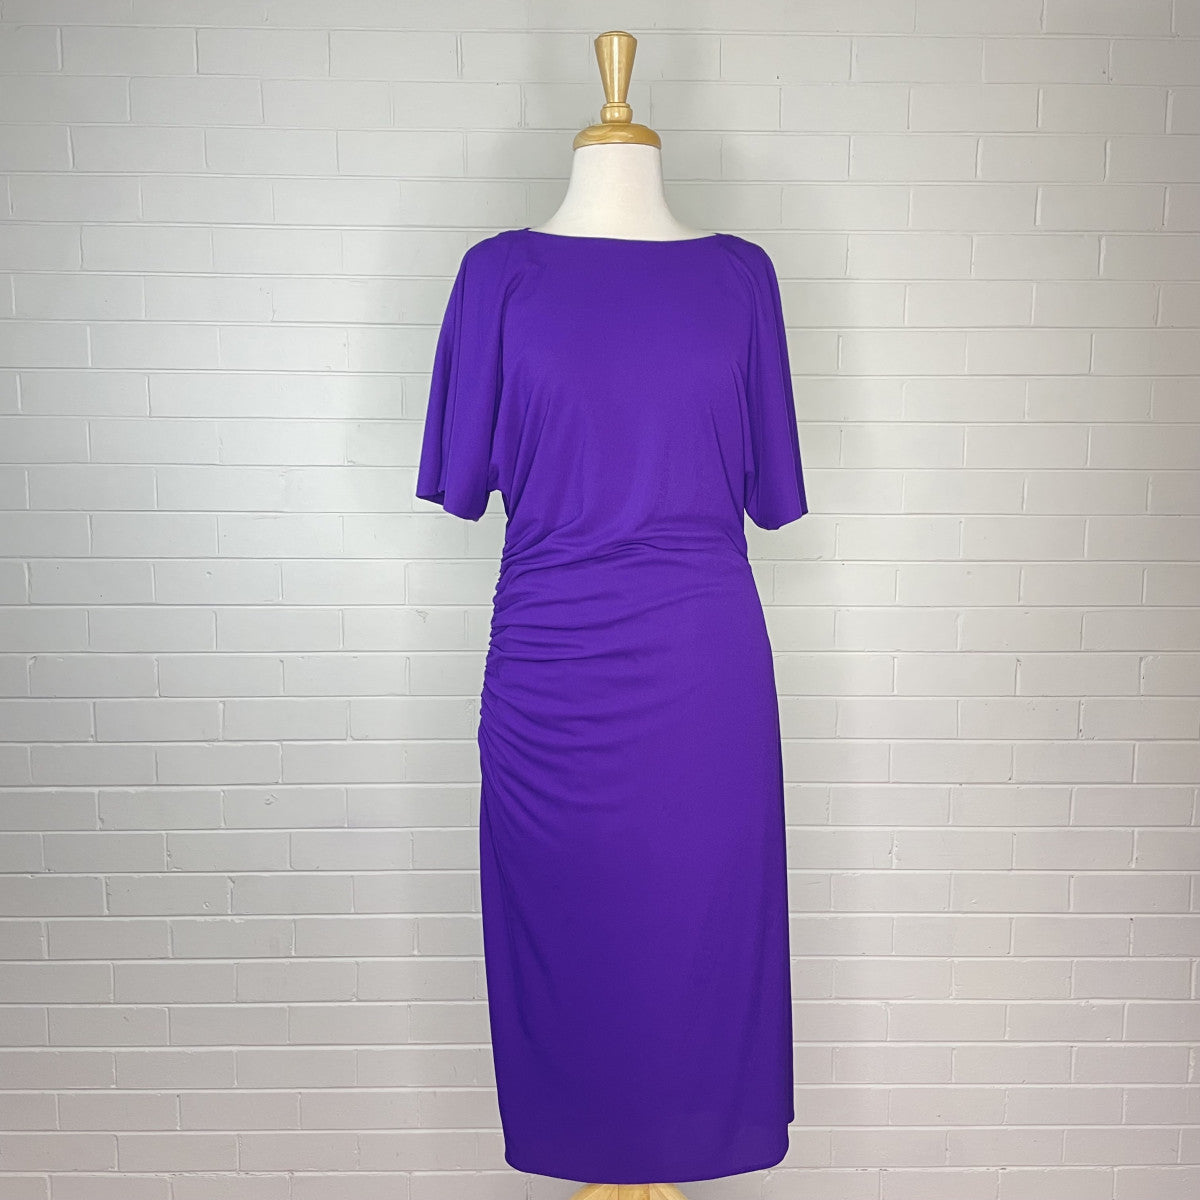 Diana Ferrari | dress | size 12 | midi length